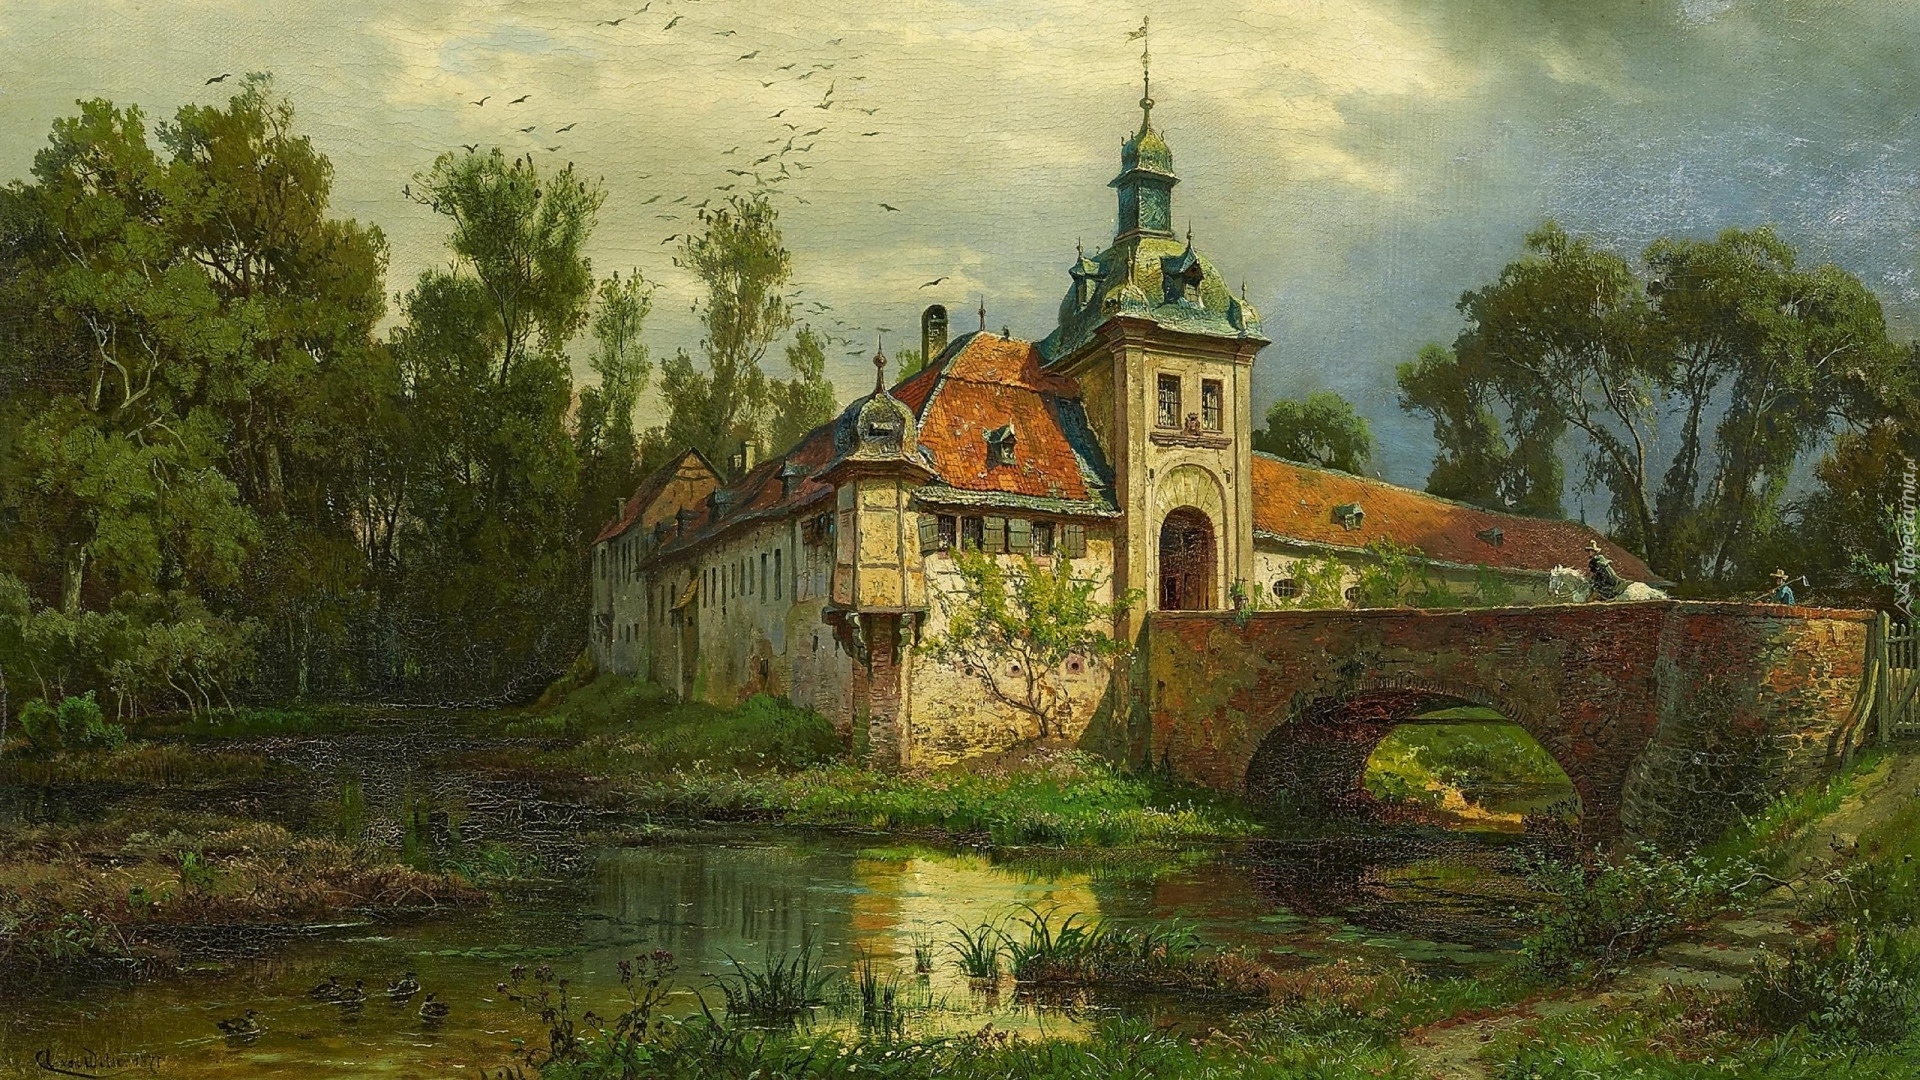 Malarstwo, Obraz, Malarz, August Levin von Wille, Fosa, Most, Zamek, Drzewa